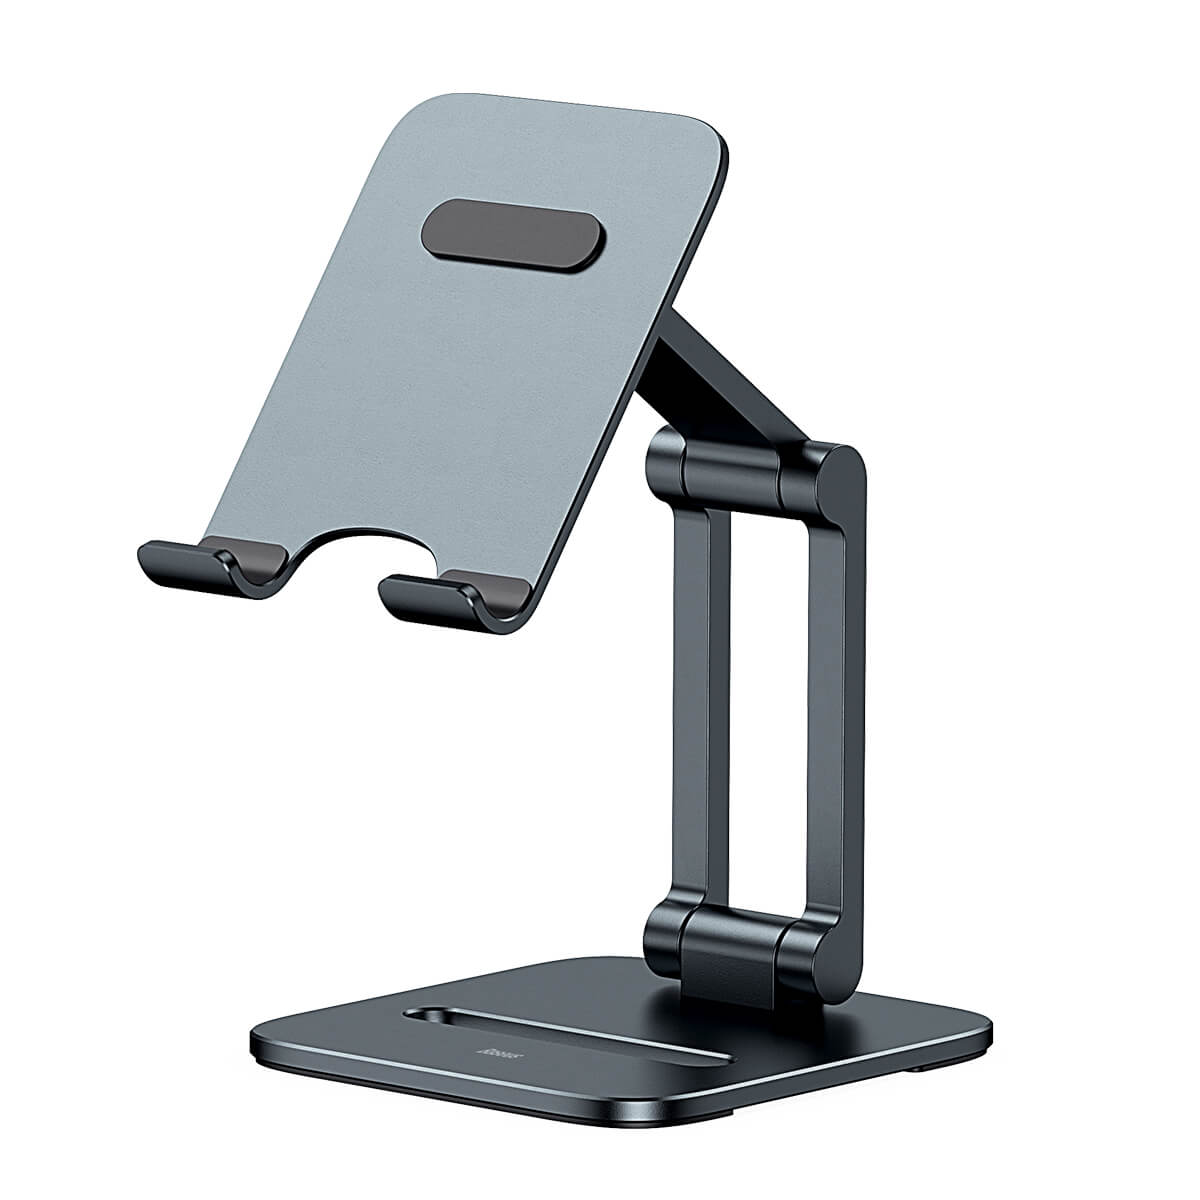 Baseus Desktop Biaxial Foldable Metal Stand (for Phones) Grey